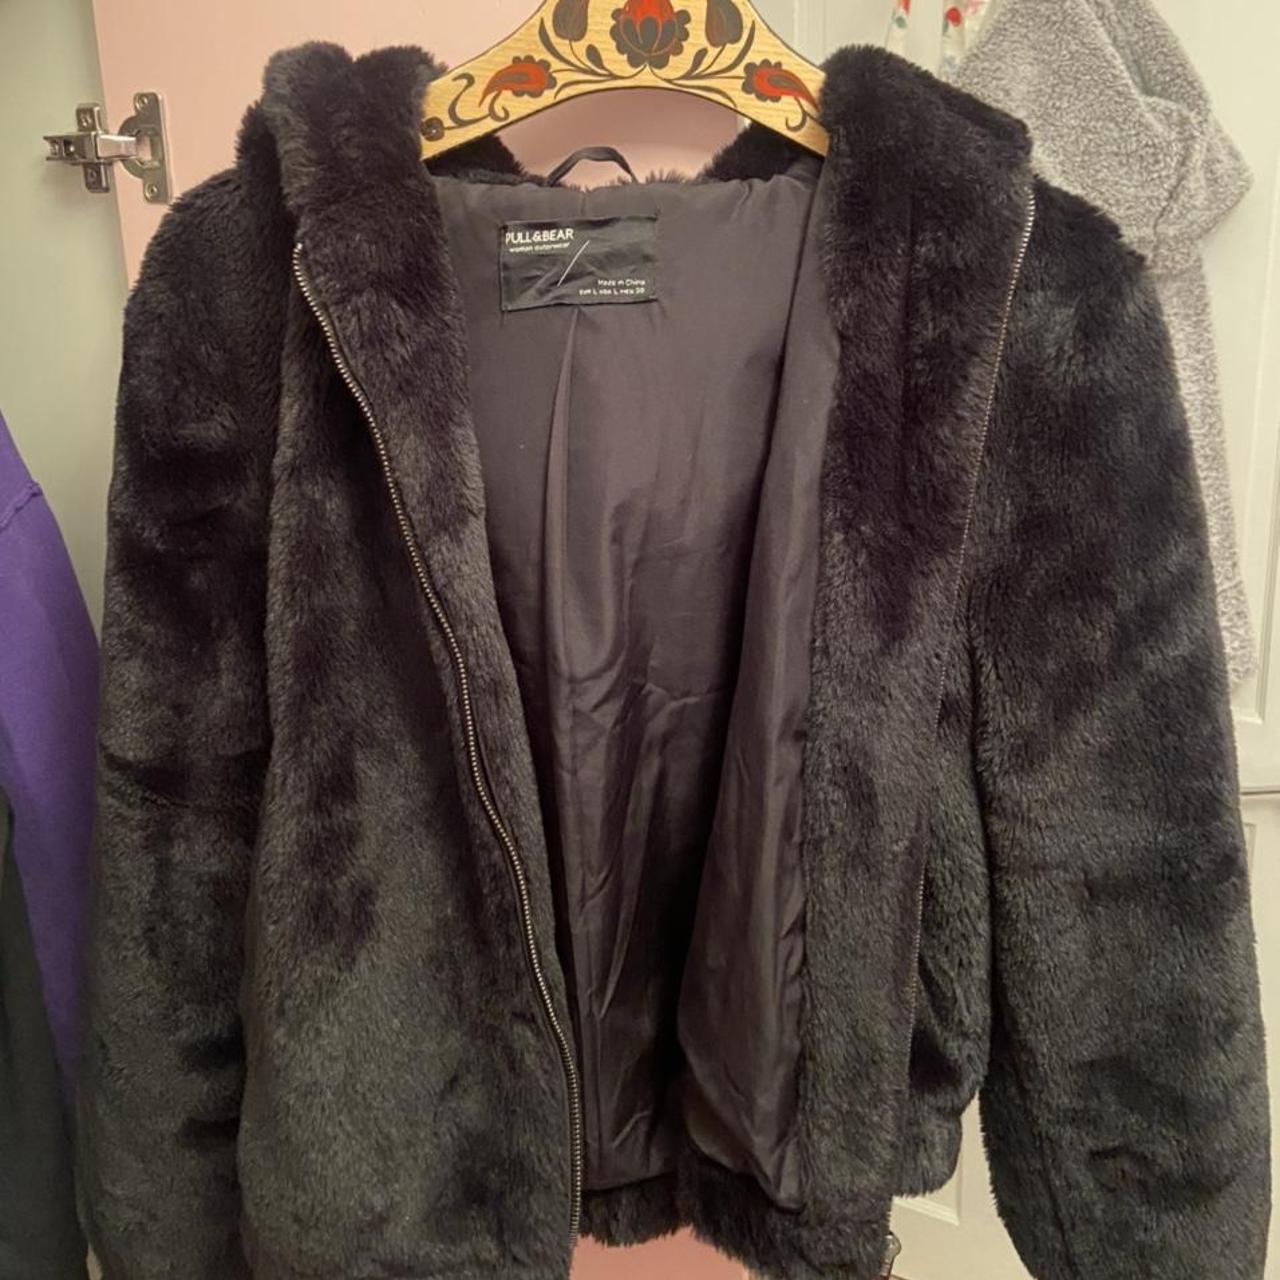 Black teddy bear fur jacket Pull and bear size M... - Depop